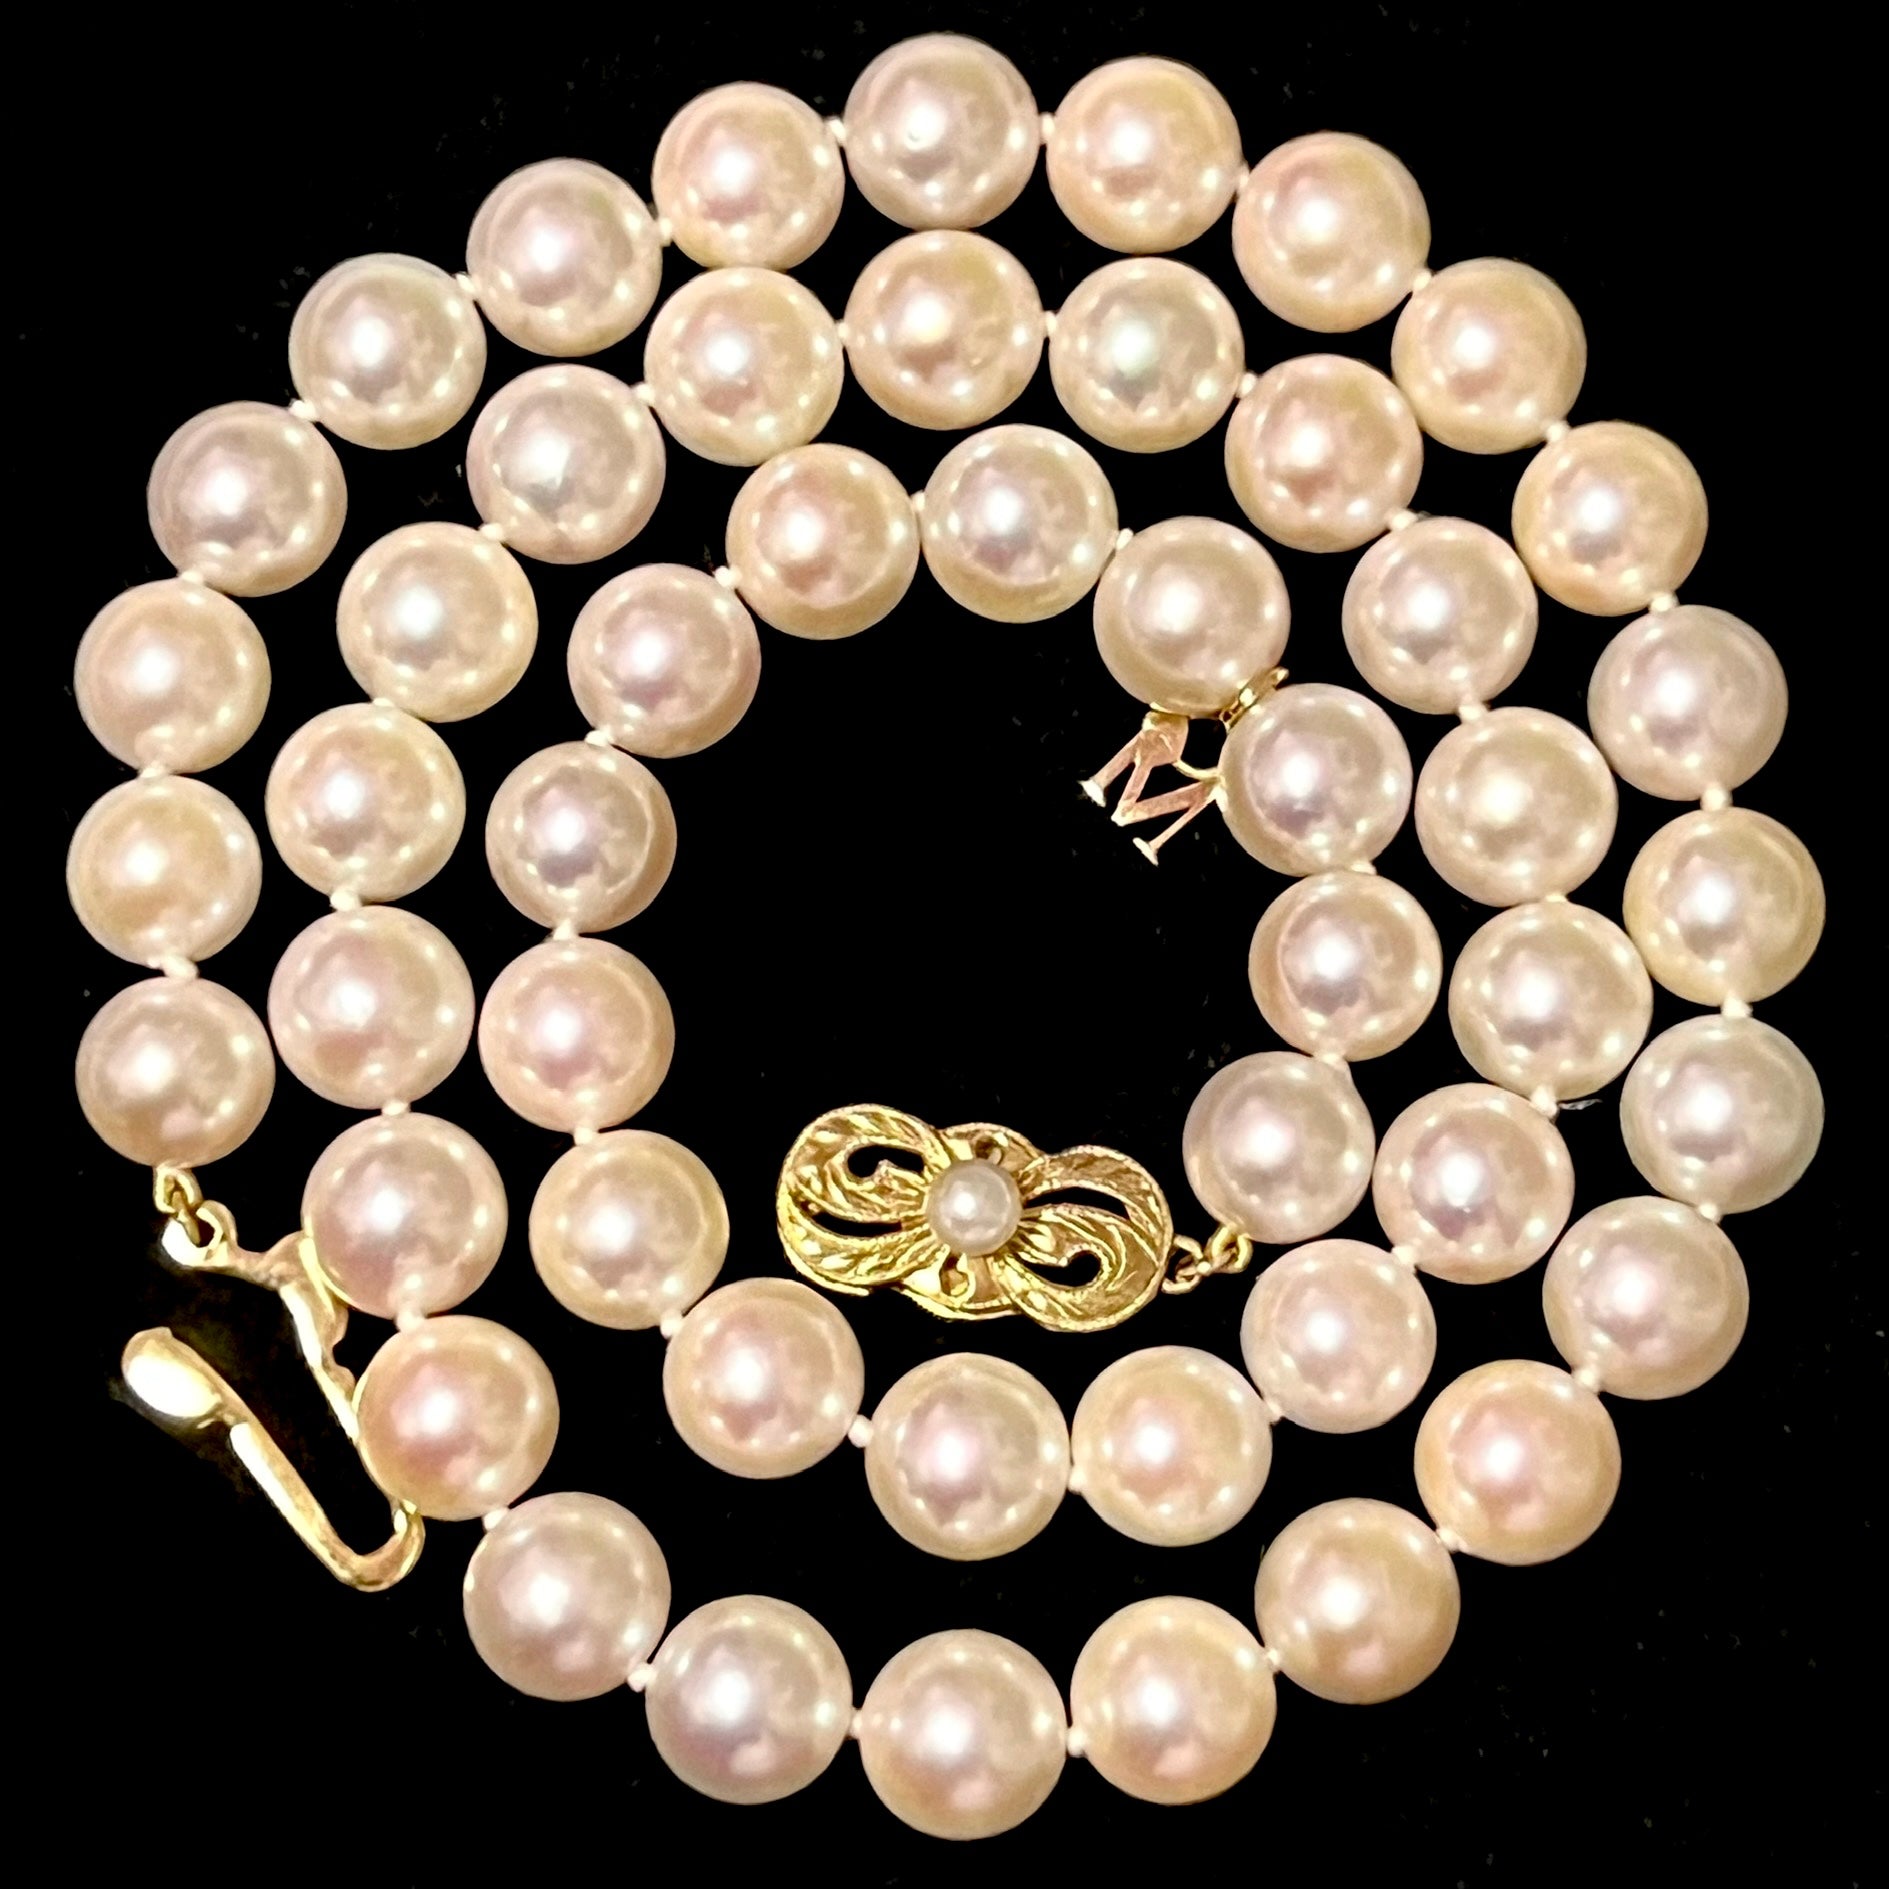 Mikimoto Estate Akoya Pearl Necklace 17" 18k Y Gold 8 mm Certified $11,450 311934 - Certified Fine Jewelry